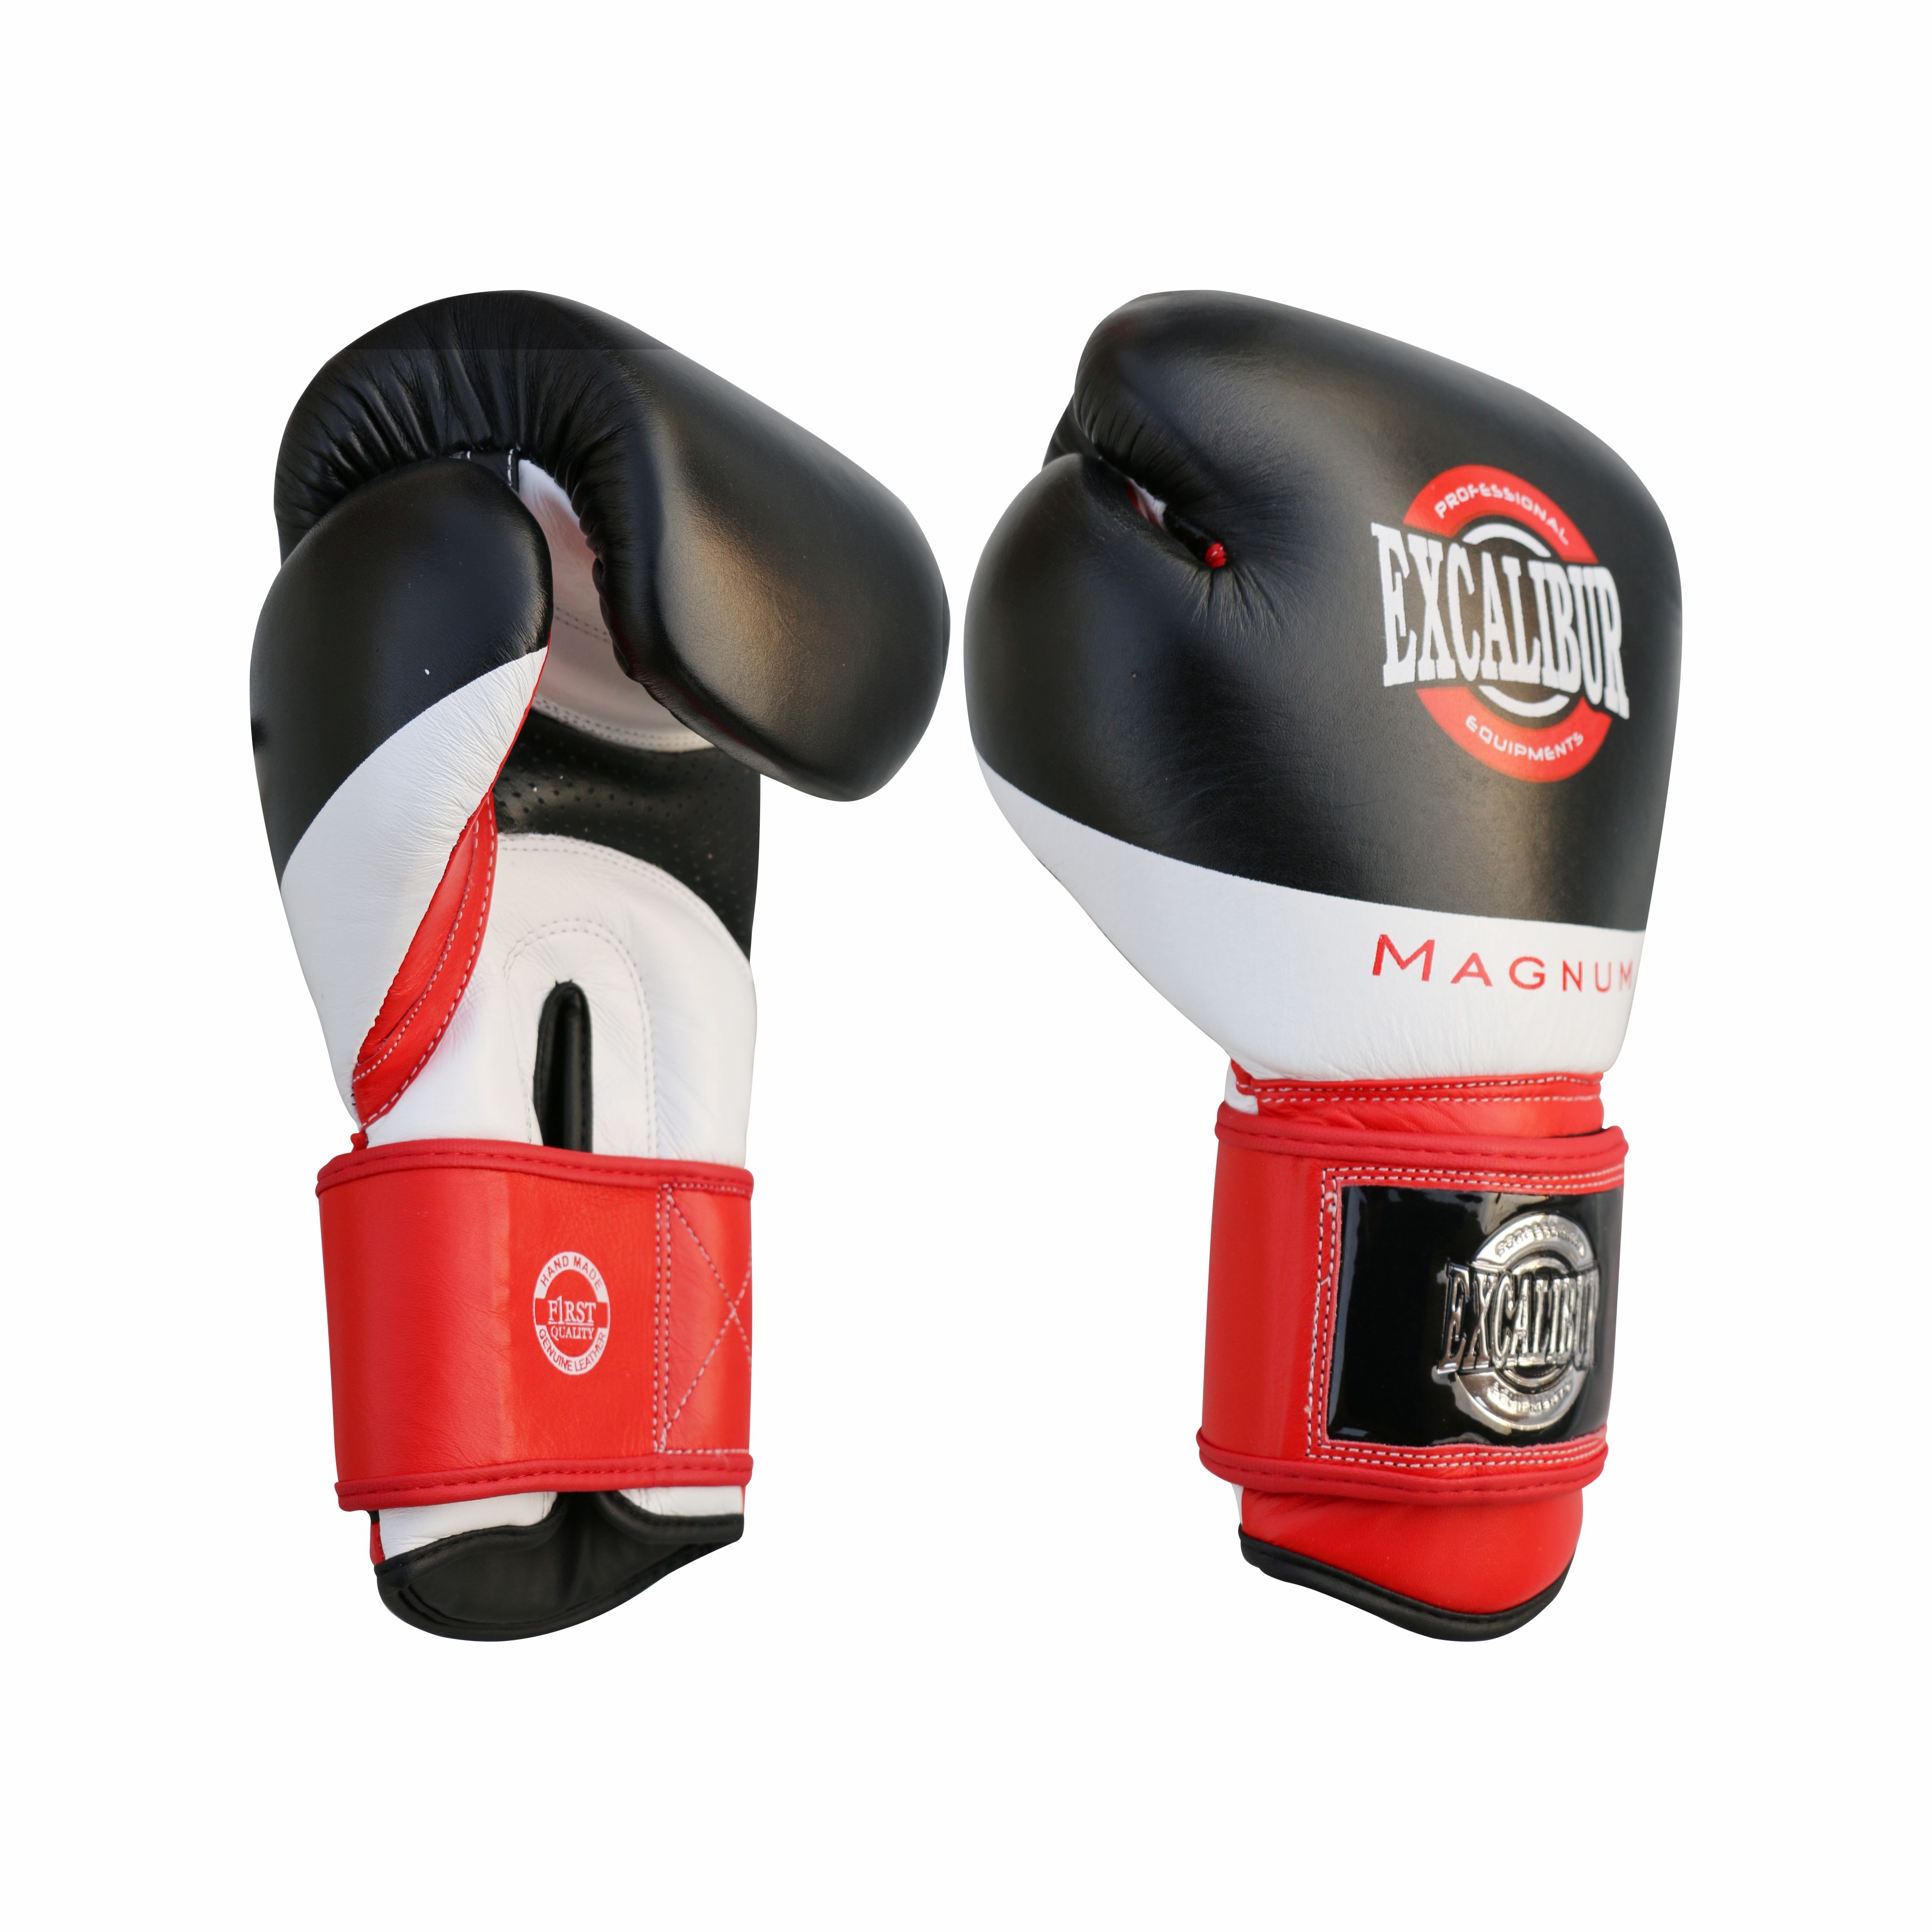 Magnum Boxing Gloves